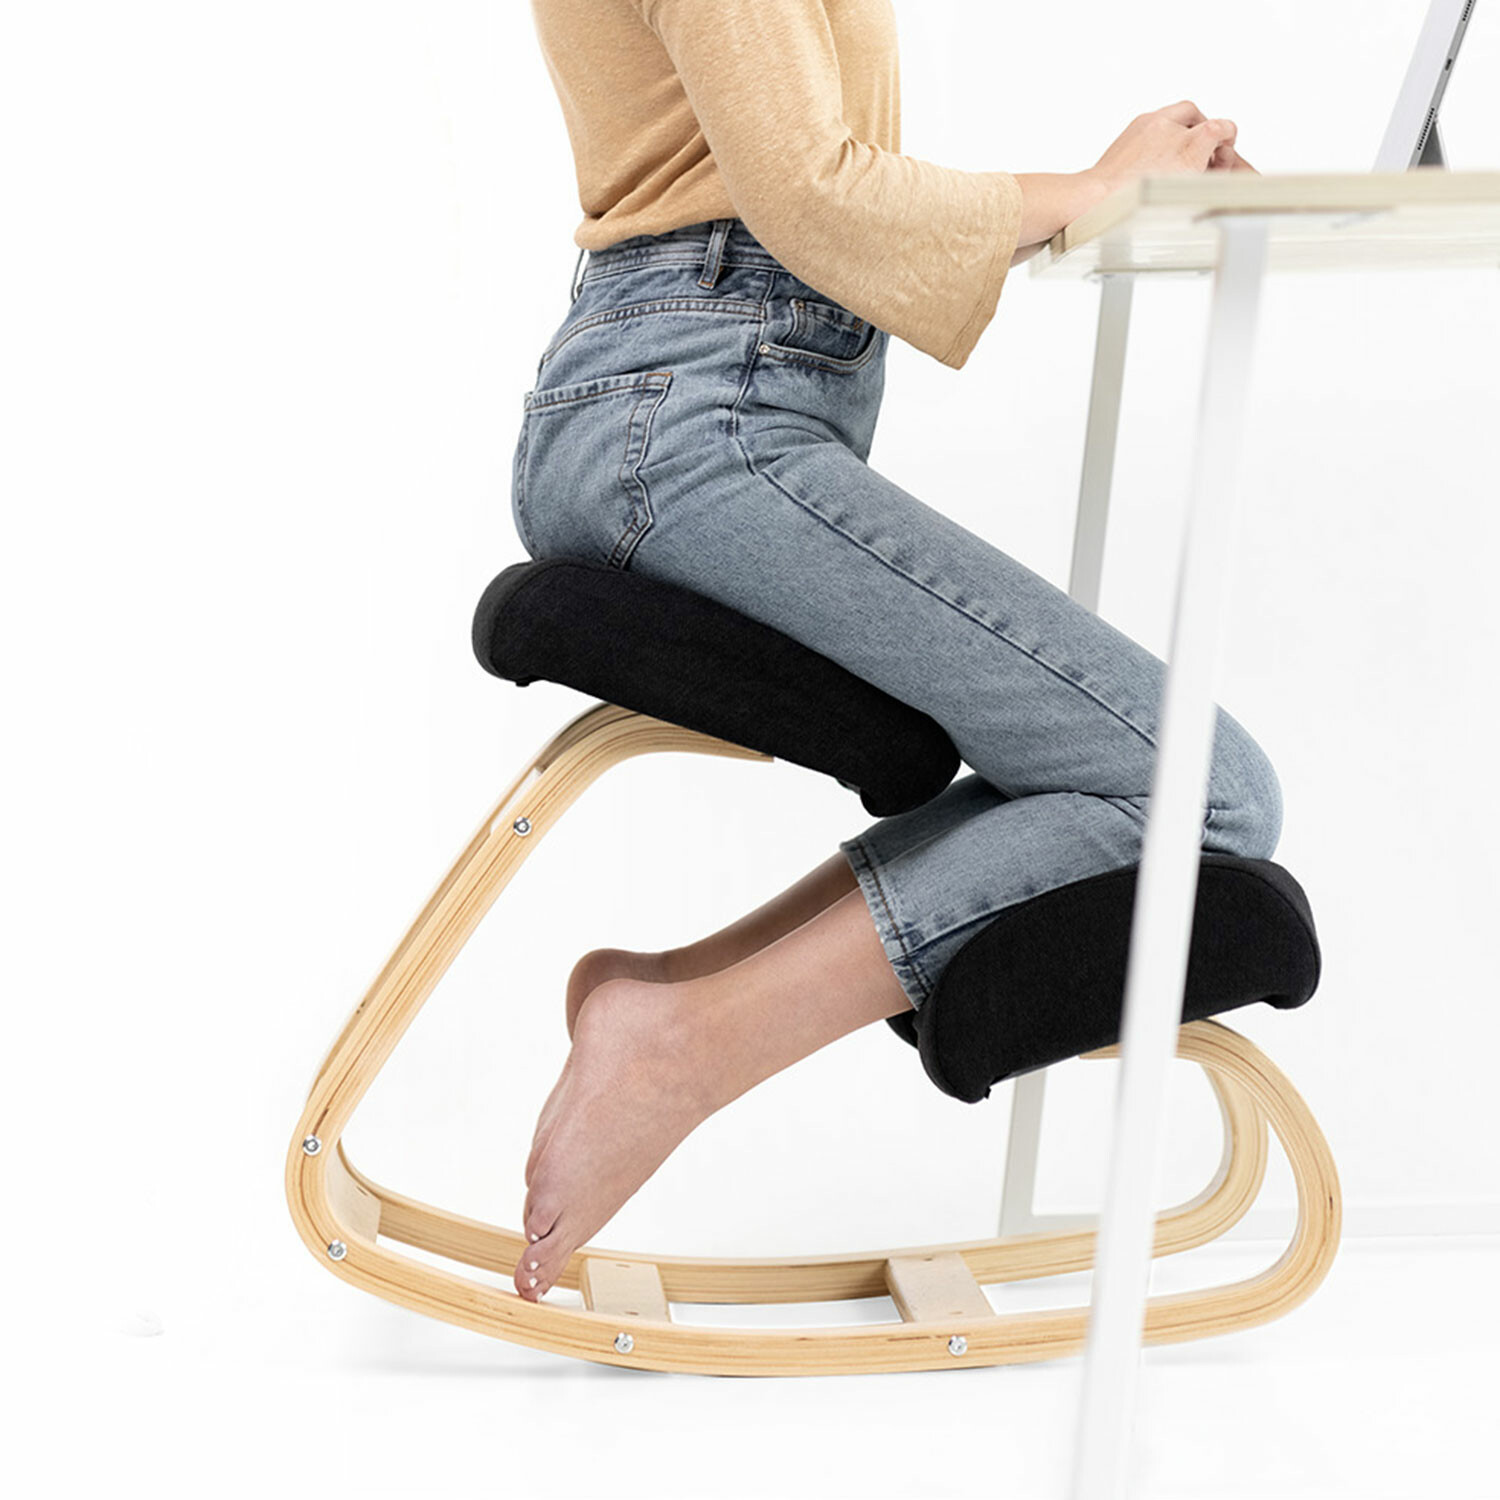 Luxton Ergonomic Kneeling Chair - Comfortable Padded Office Desk